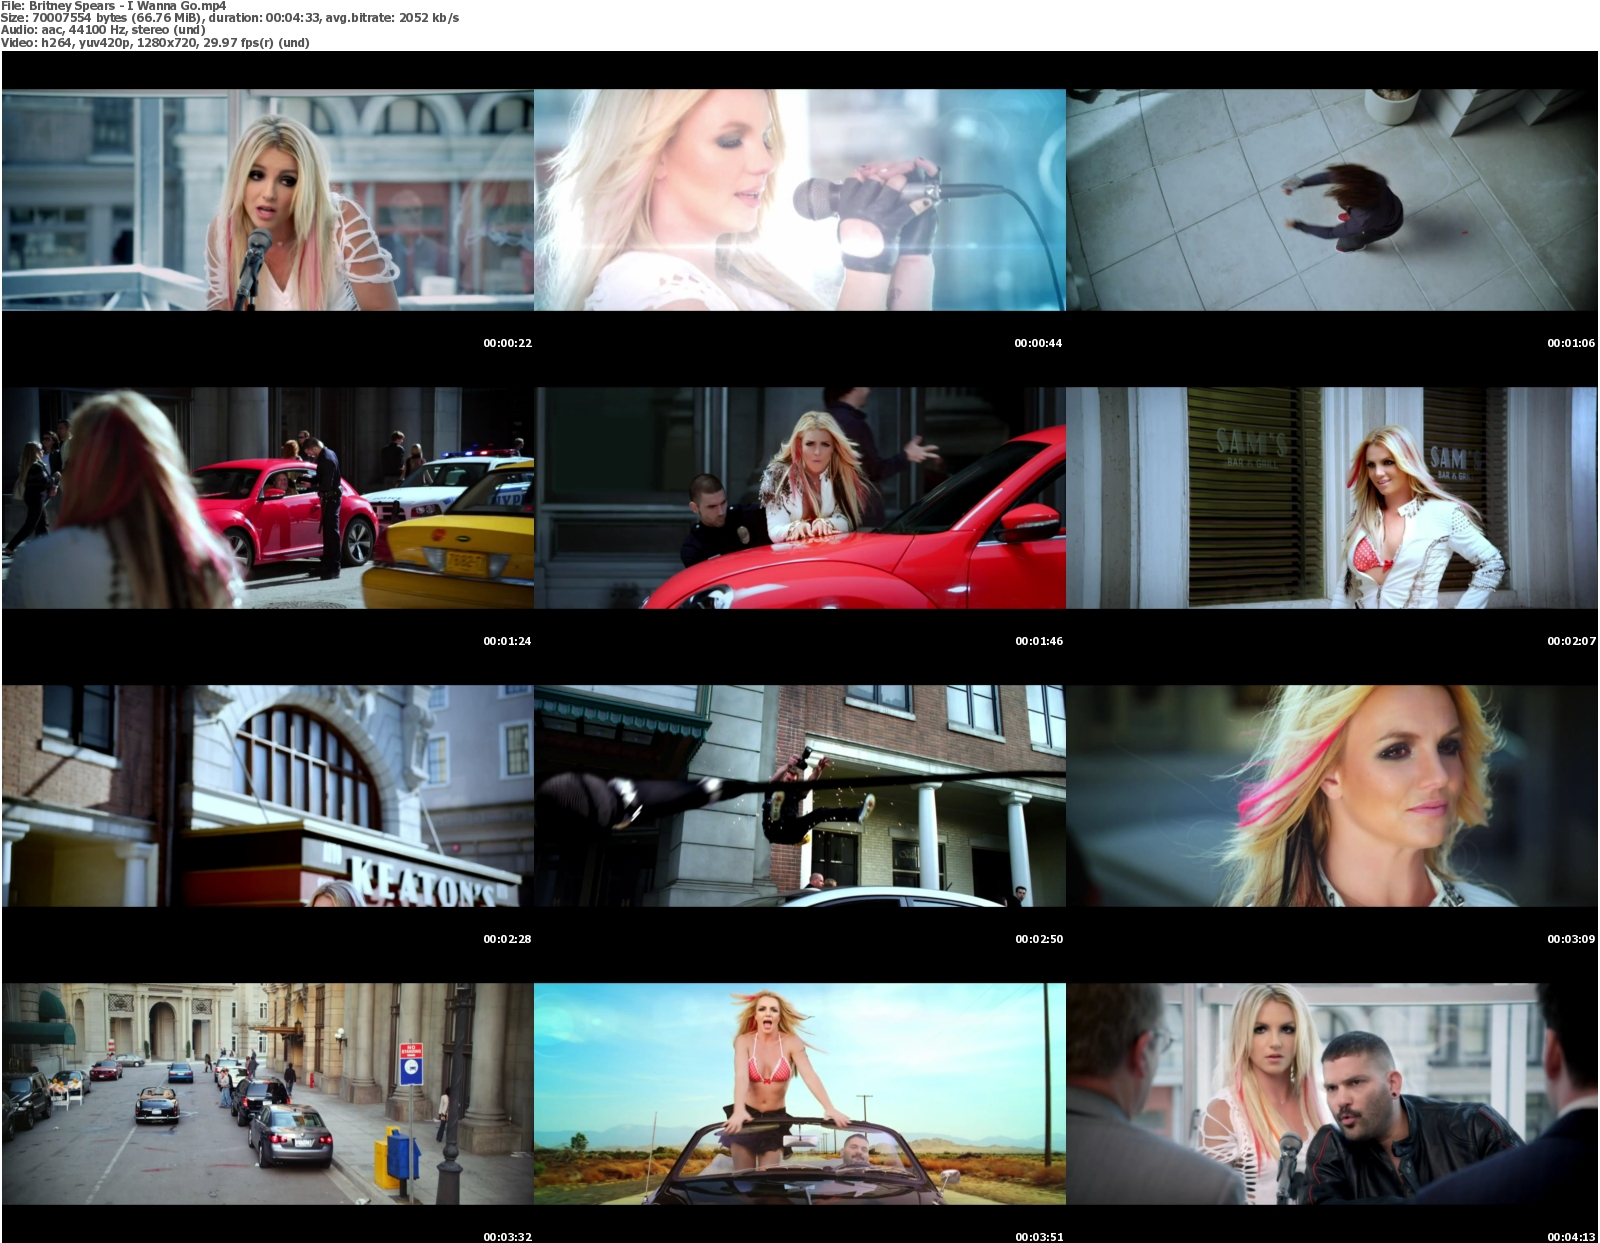 https://blogger.googleusercontent.com/img/b/R29vZ2xl/AVvXsEjJmeDZA_lGTMGmCHRjyn-5MGhx2GrELYdWUFNUlk3PtvNMjZOgeNgA44nNaLsPhOxBEb8nQz0PnTIl0hhk7HxCJIvCeMlGbkhM1iaSFaMH3EScfU0KKKY4rROwsDk98ZeyU8mvok9Jwb0n/s1600/Britney+Spears+-+I+Wanna+Go_s.jpg